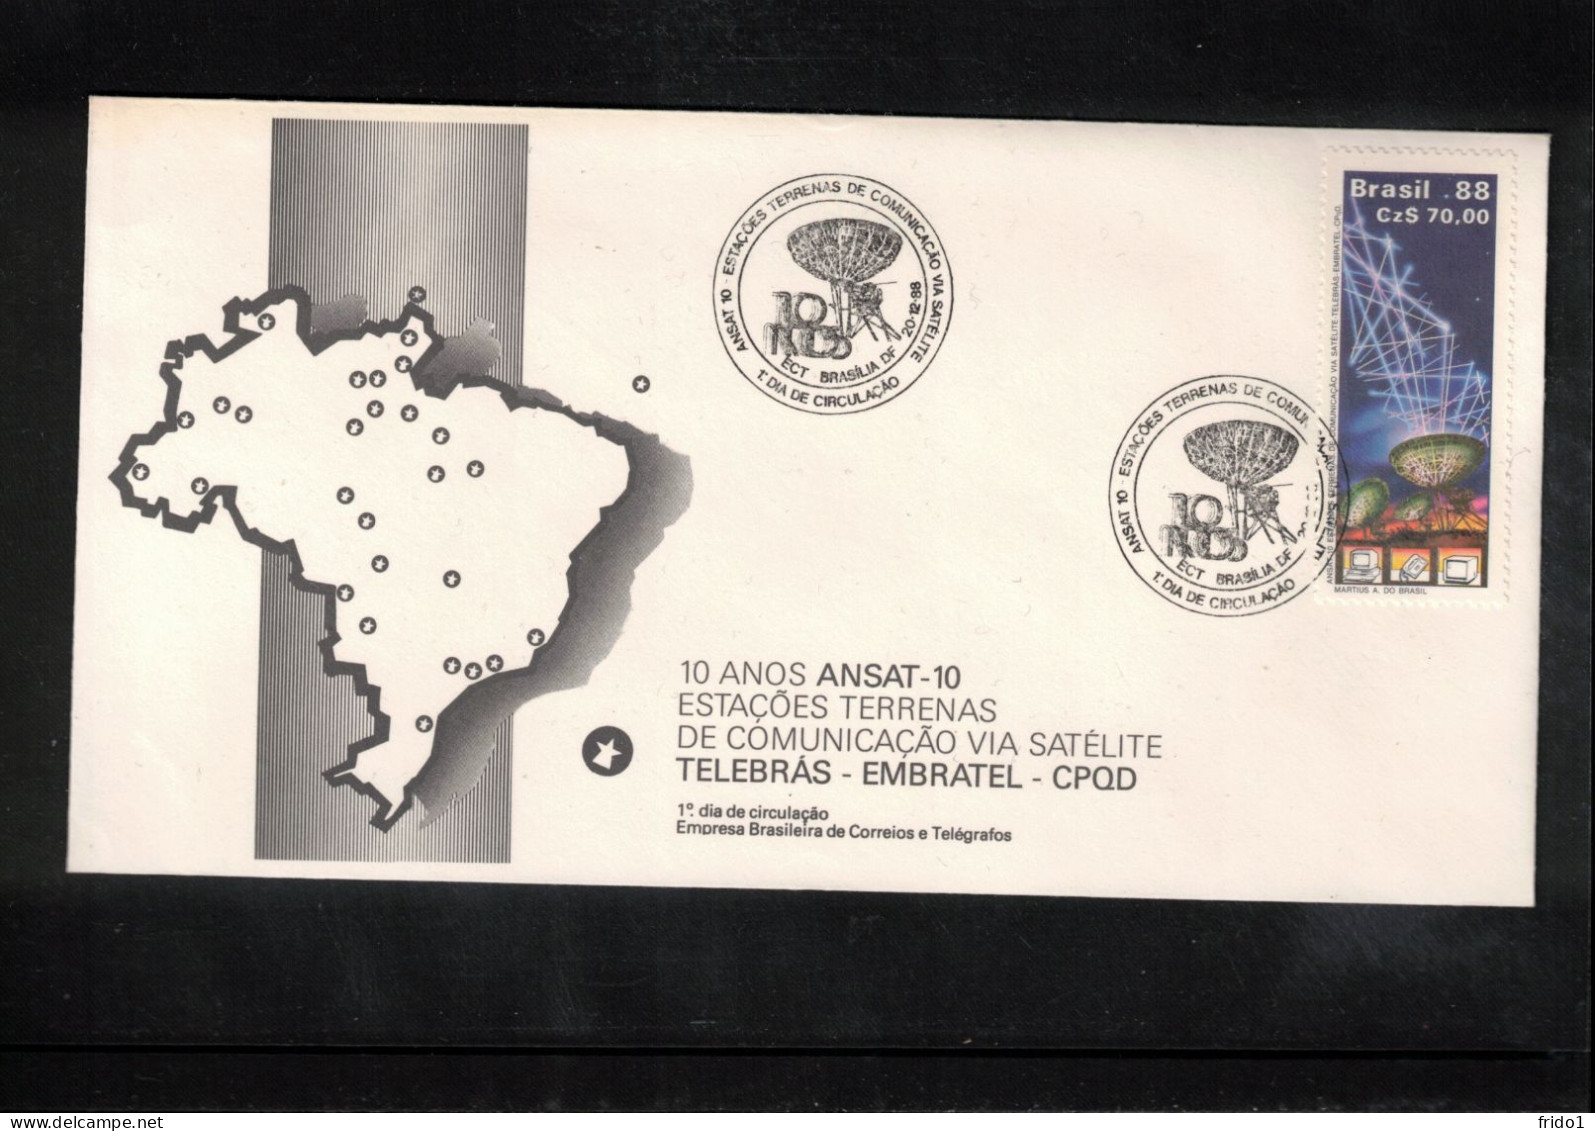 Brasil 1988 Space / Weltraum 10th Anniversary Of ANSAT-10 Satellite Communications Interesting Cover FDC - Zuid-Amerika